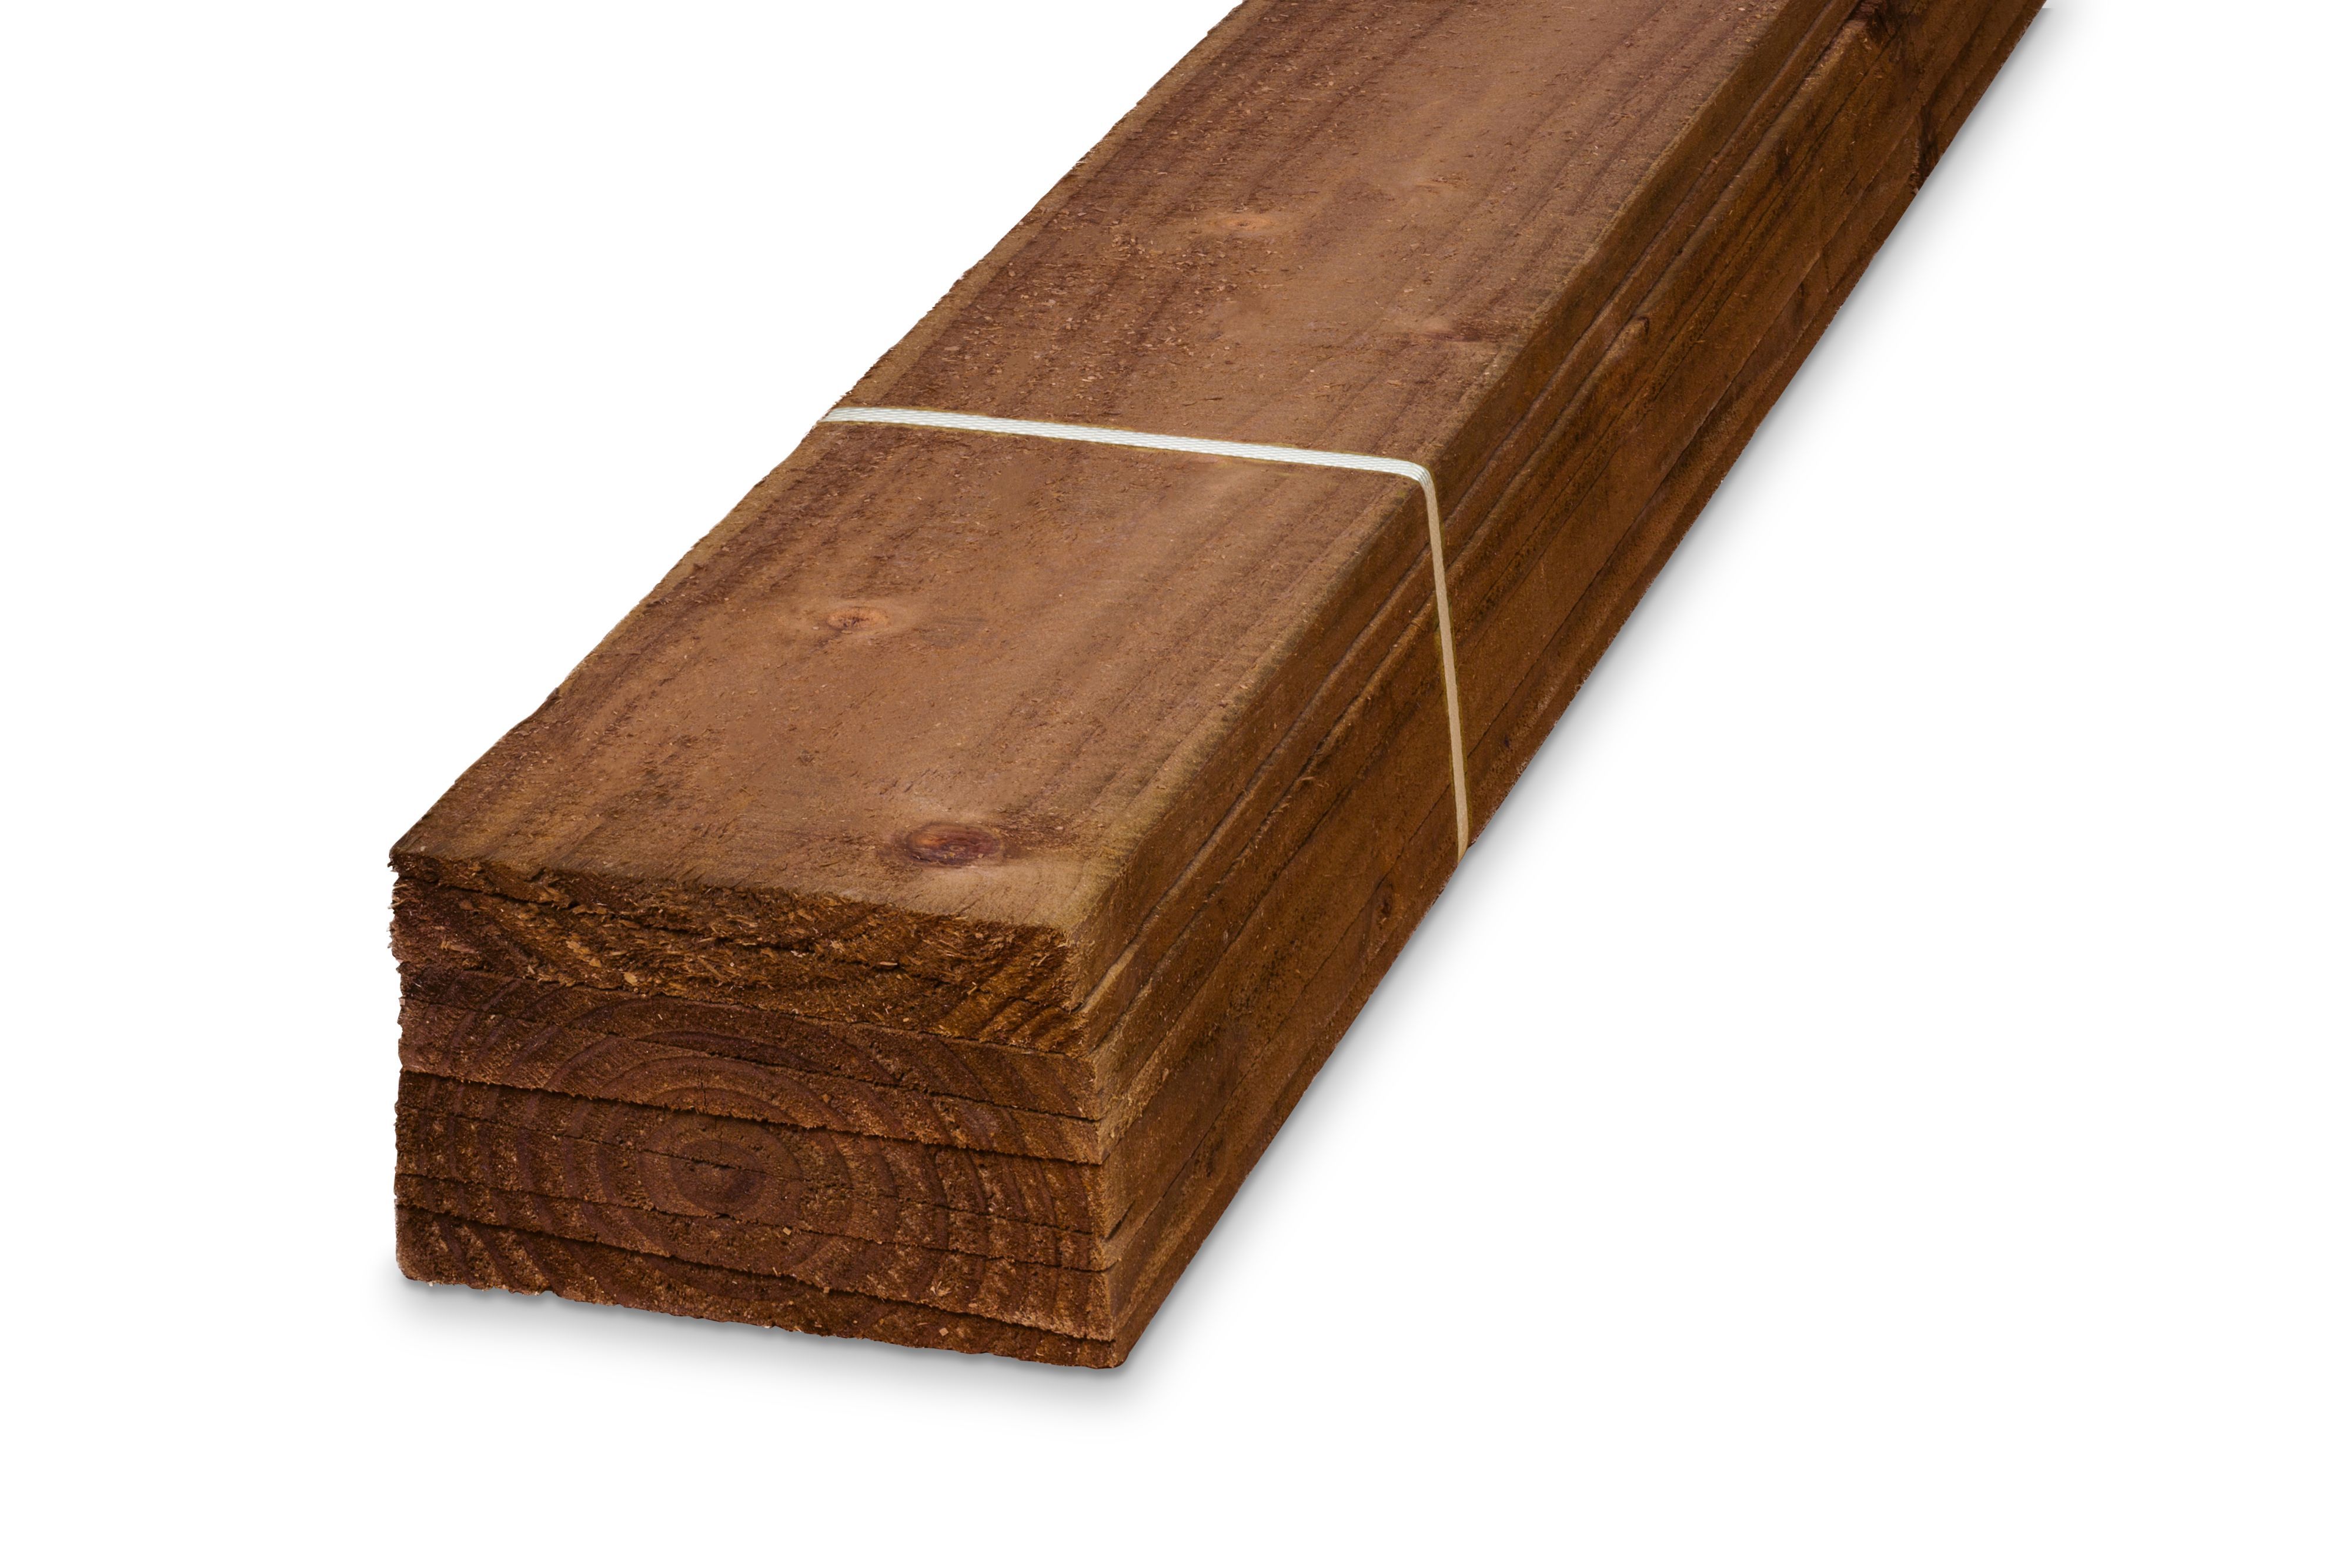 Klikstrom Spruce Feather edge Fence board (L)1.8m (W)125mm (T)11mm, Pack of 8